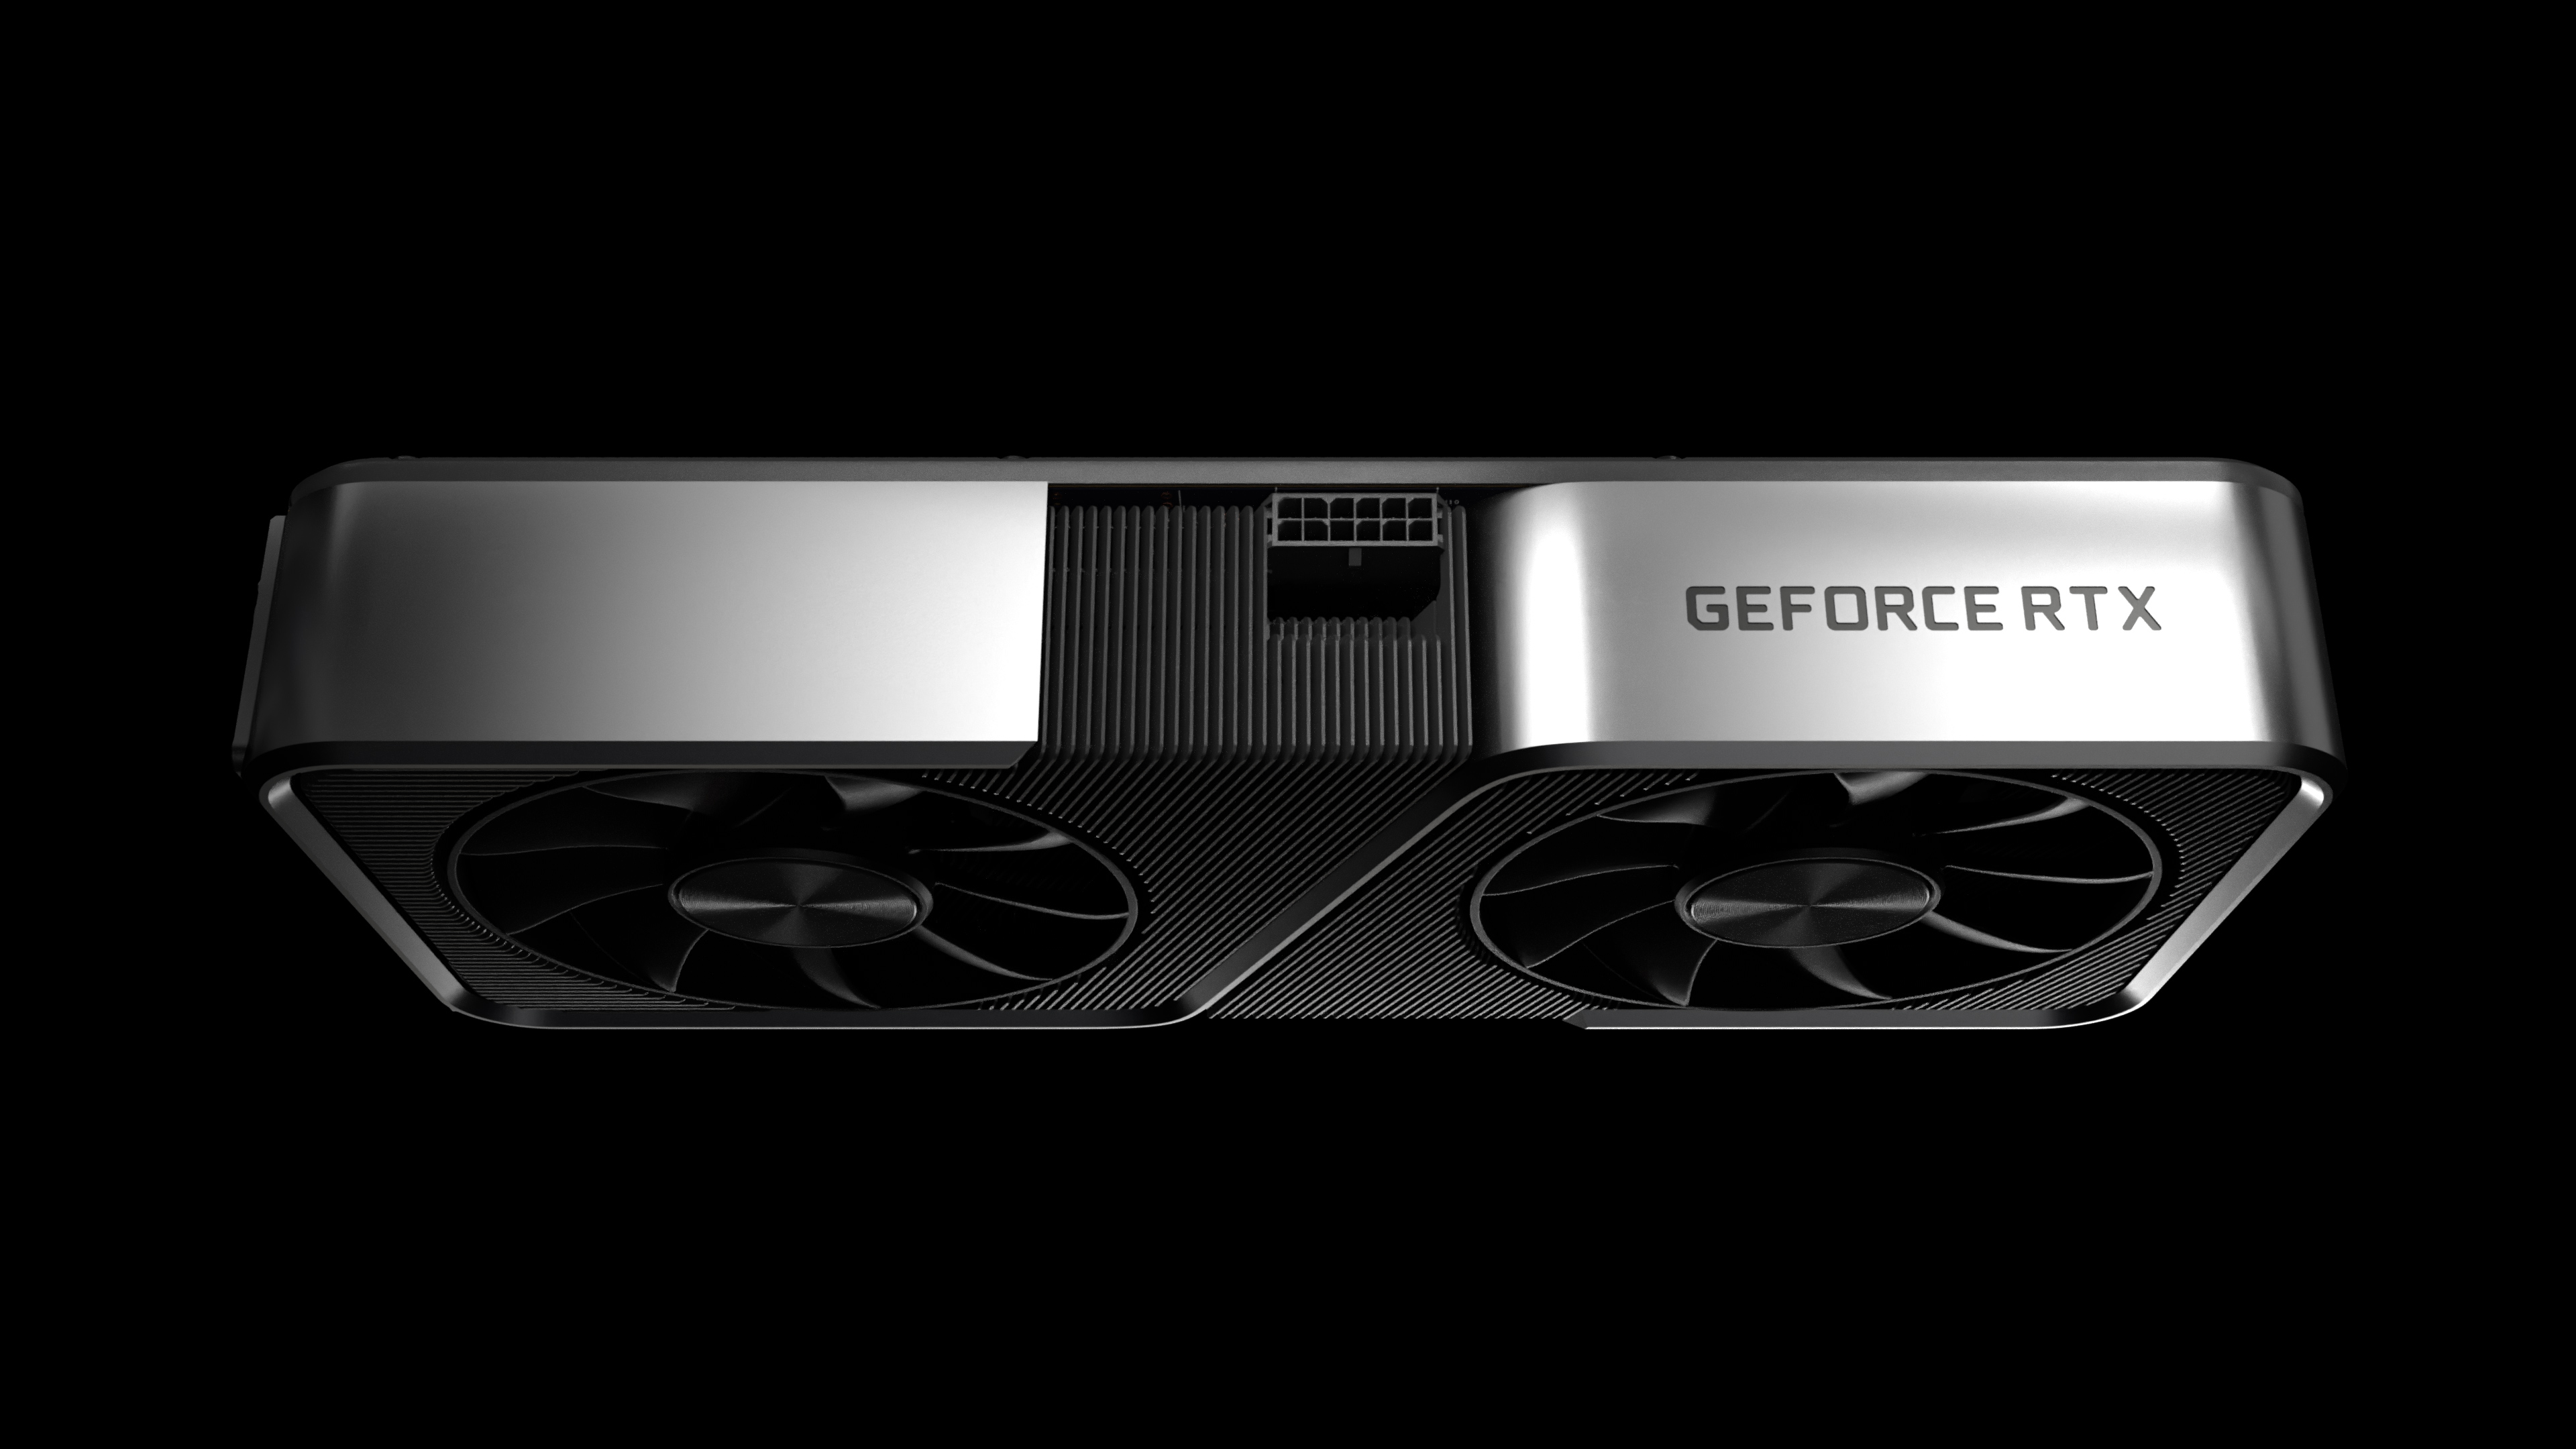 GeForce RTX 3070 so với Radeon RX 6700 XT